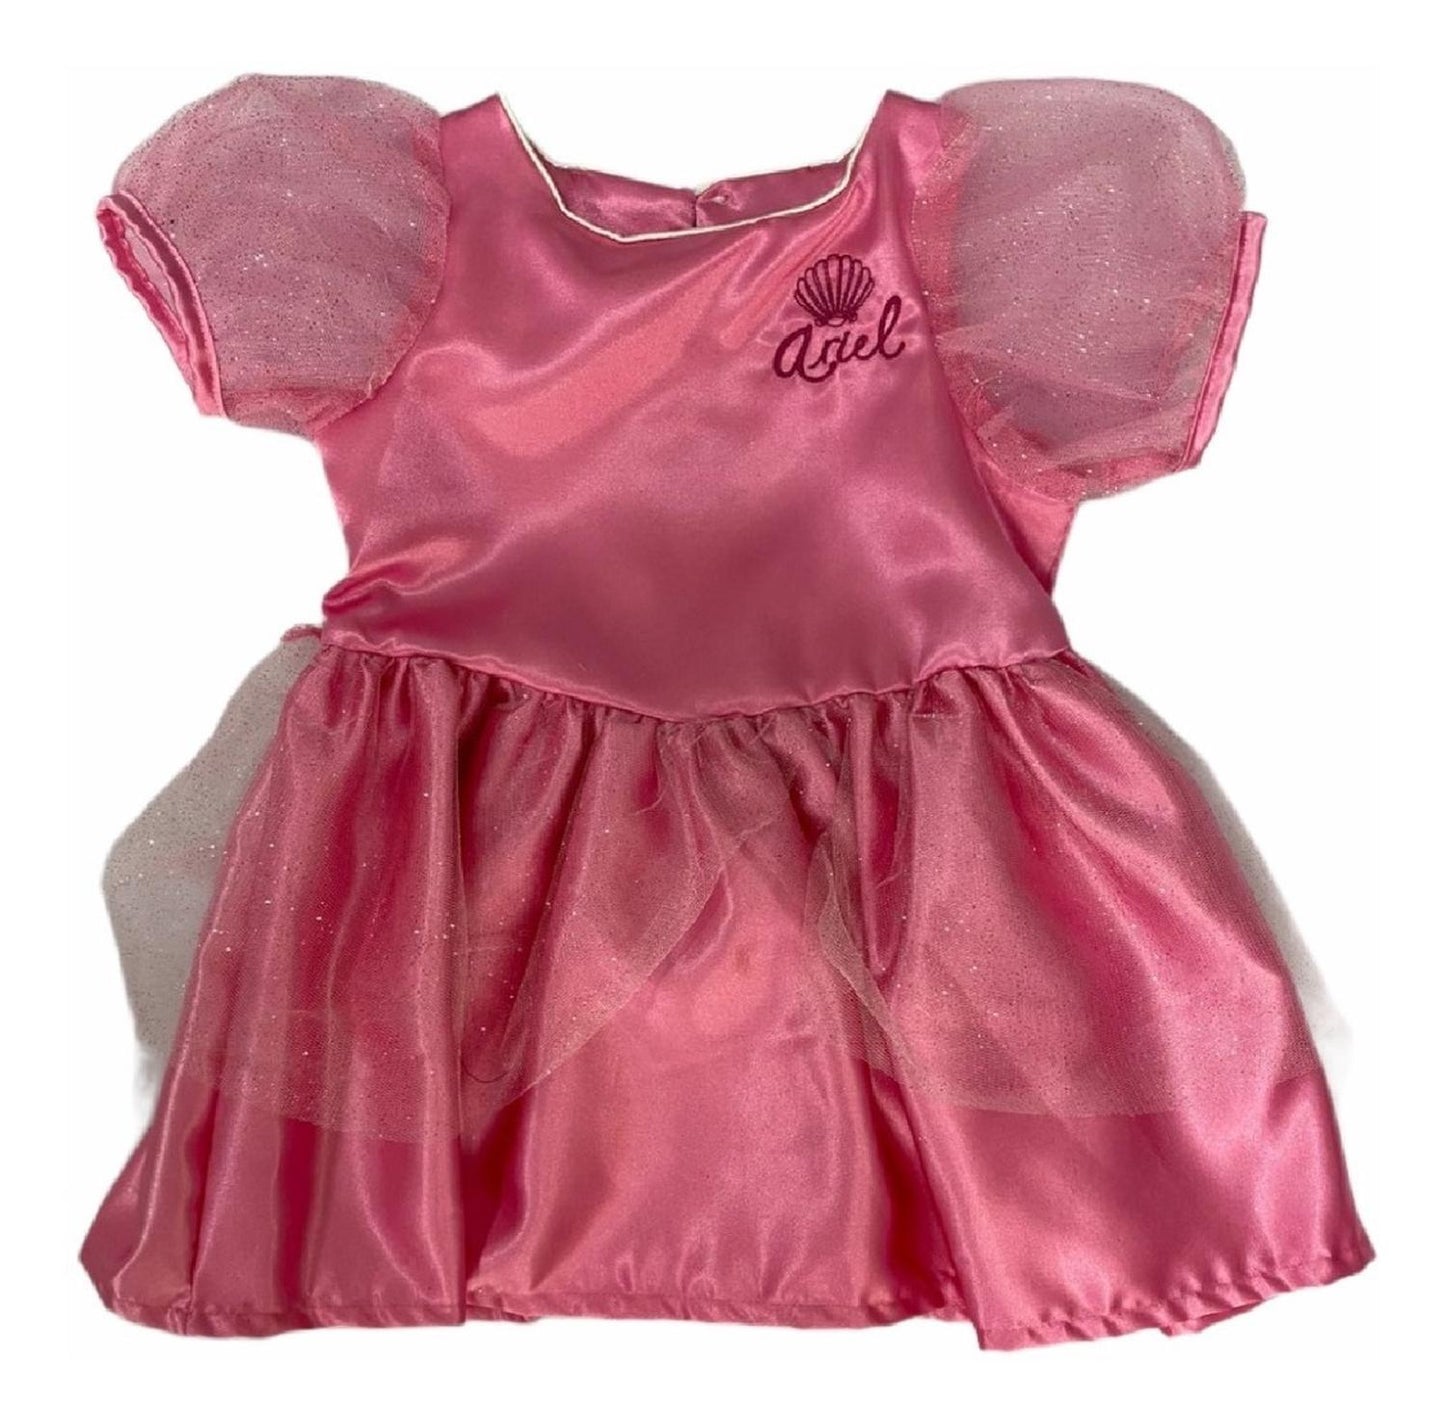 Kit 3 Vestidos Disney para Niña Princesas Cenicienta, Ariel, Bella